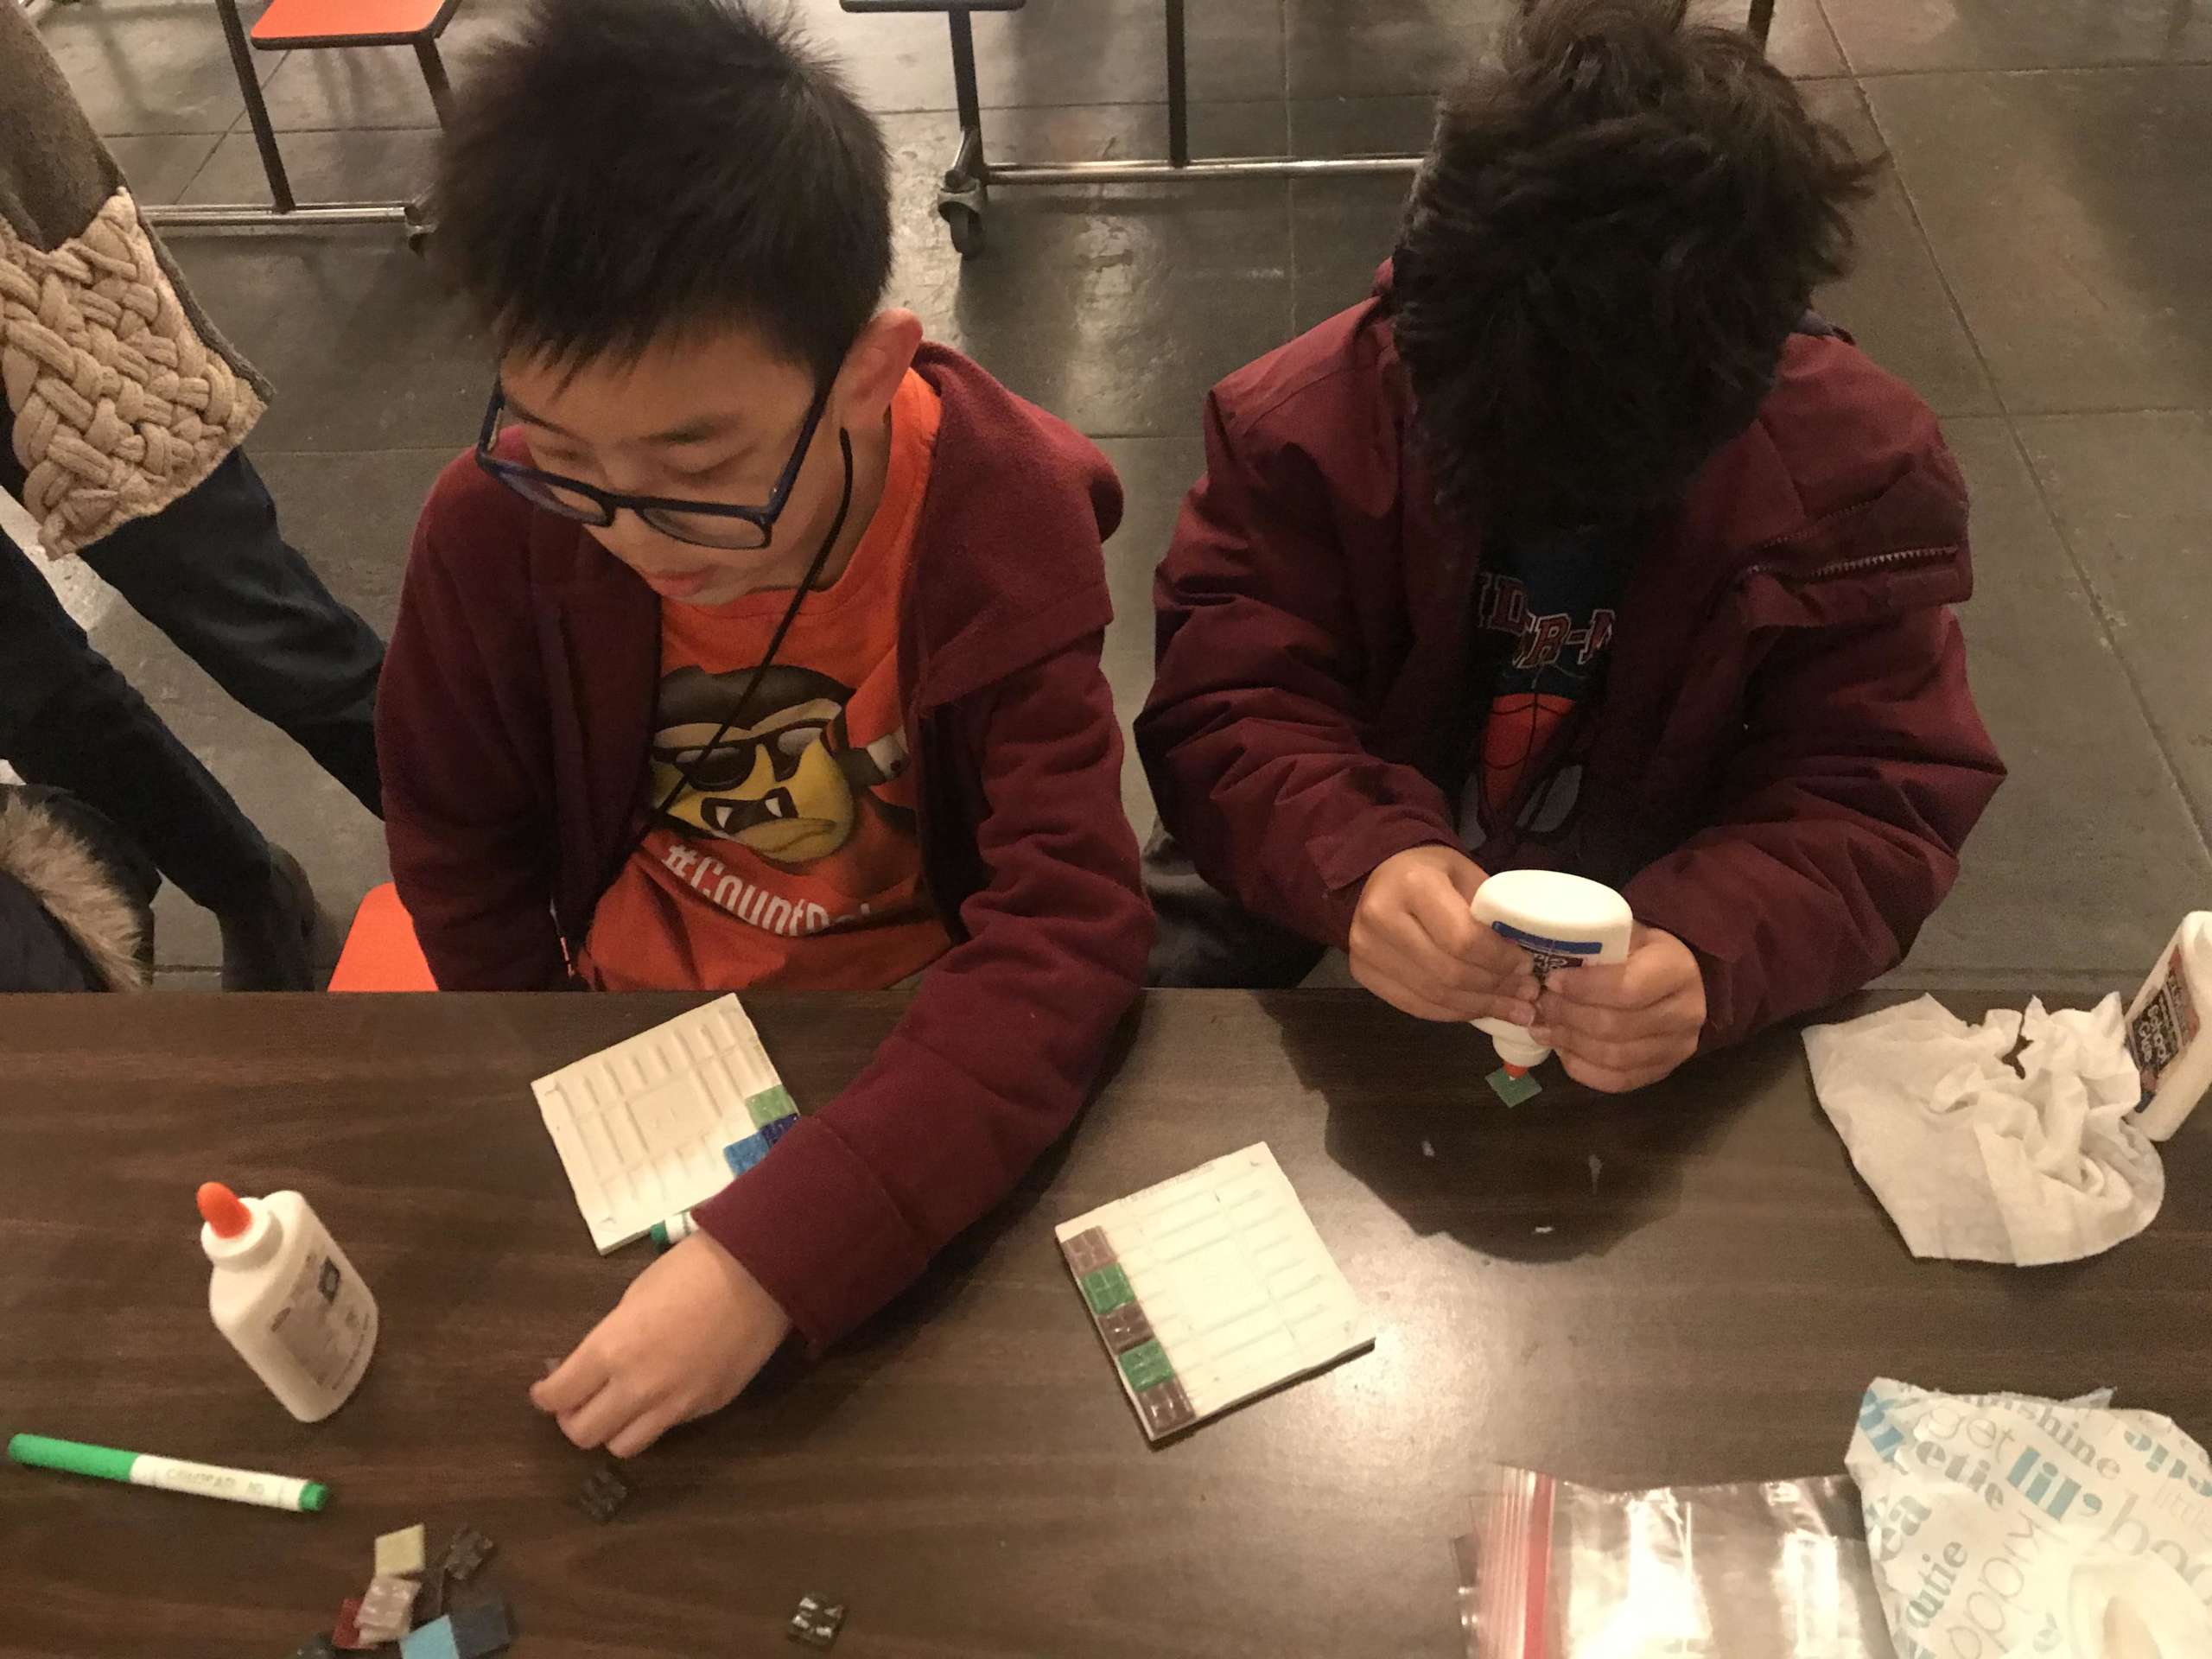 Two students glue together mosaics.